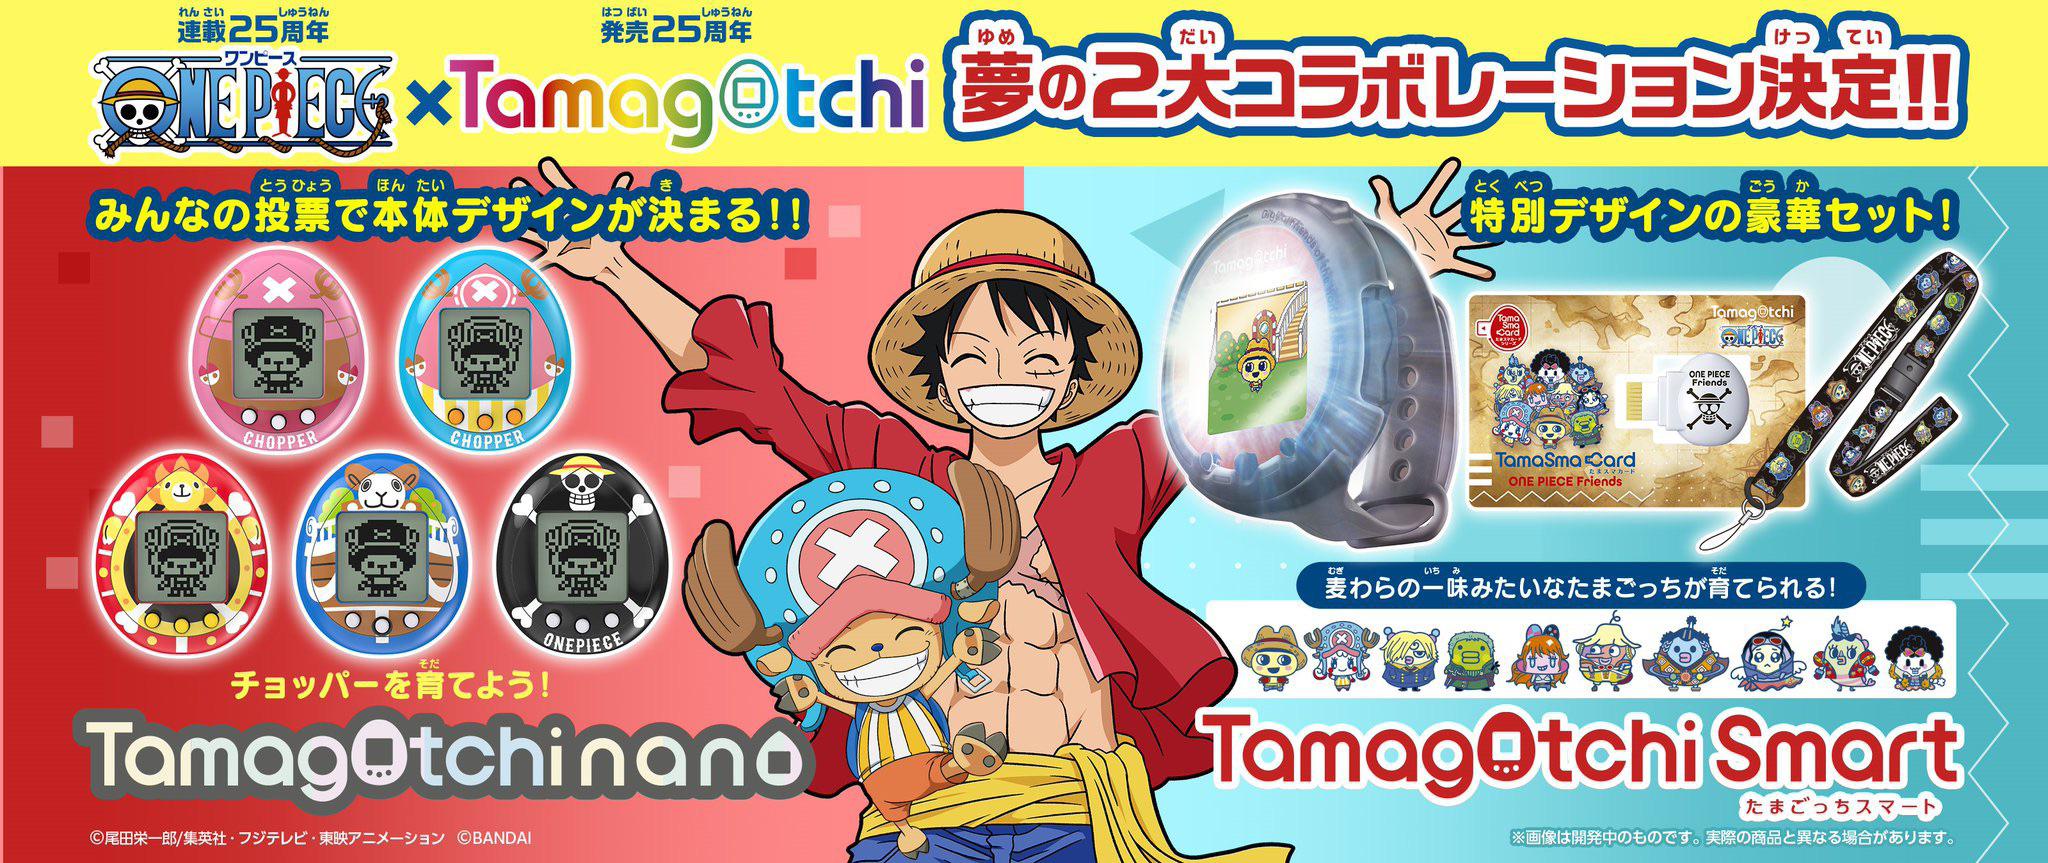 Tamagotchi Smart One Piece Special Set Japanese